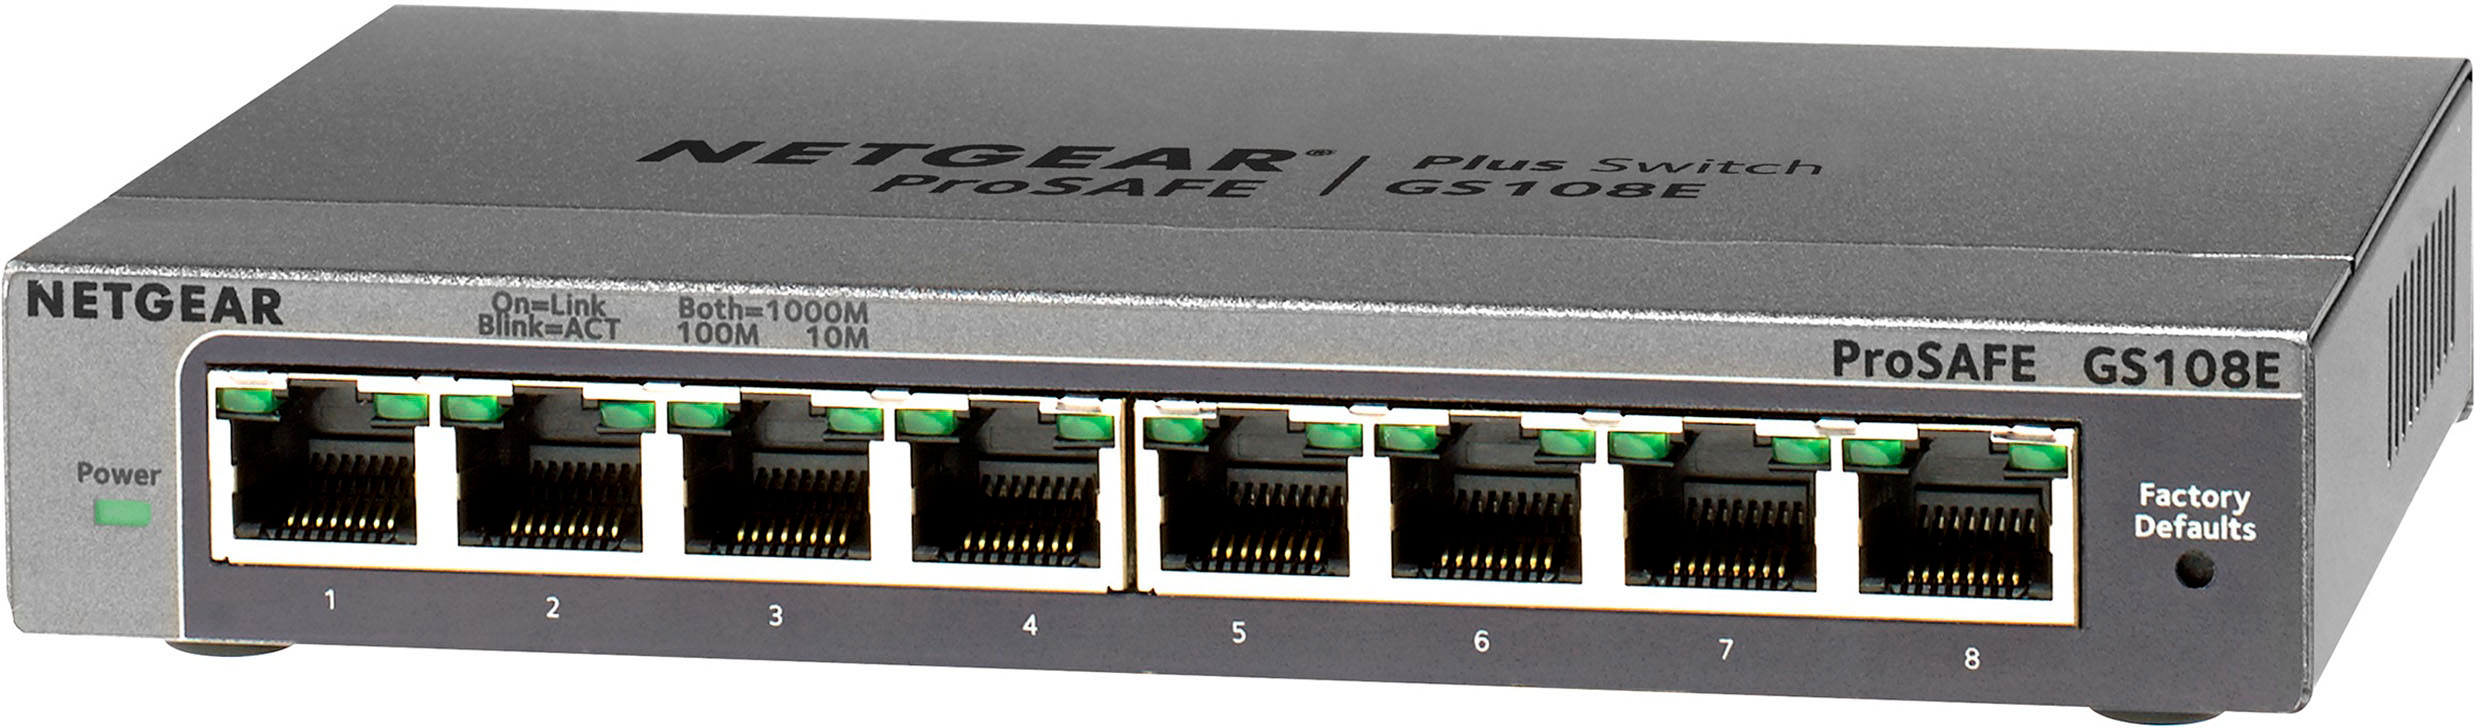 Left View: NETGEAR - 48-Port 10/100/1000 Mbps Gigabit Fully Managed Switch - Blue